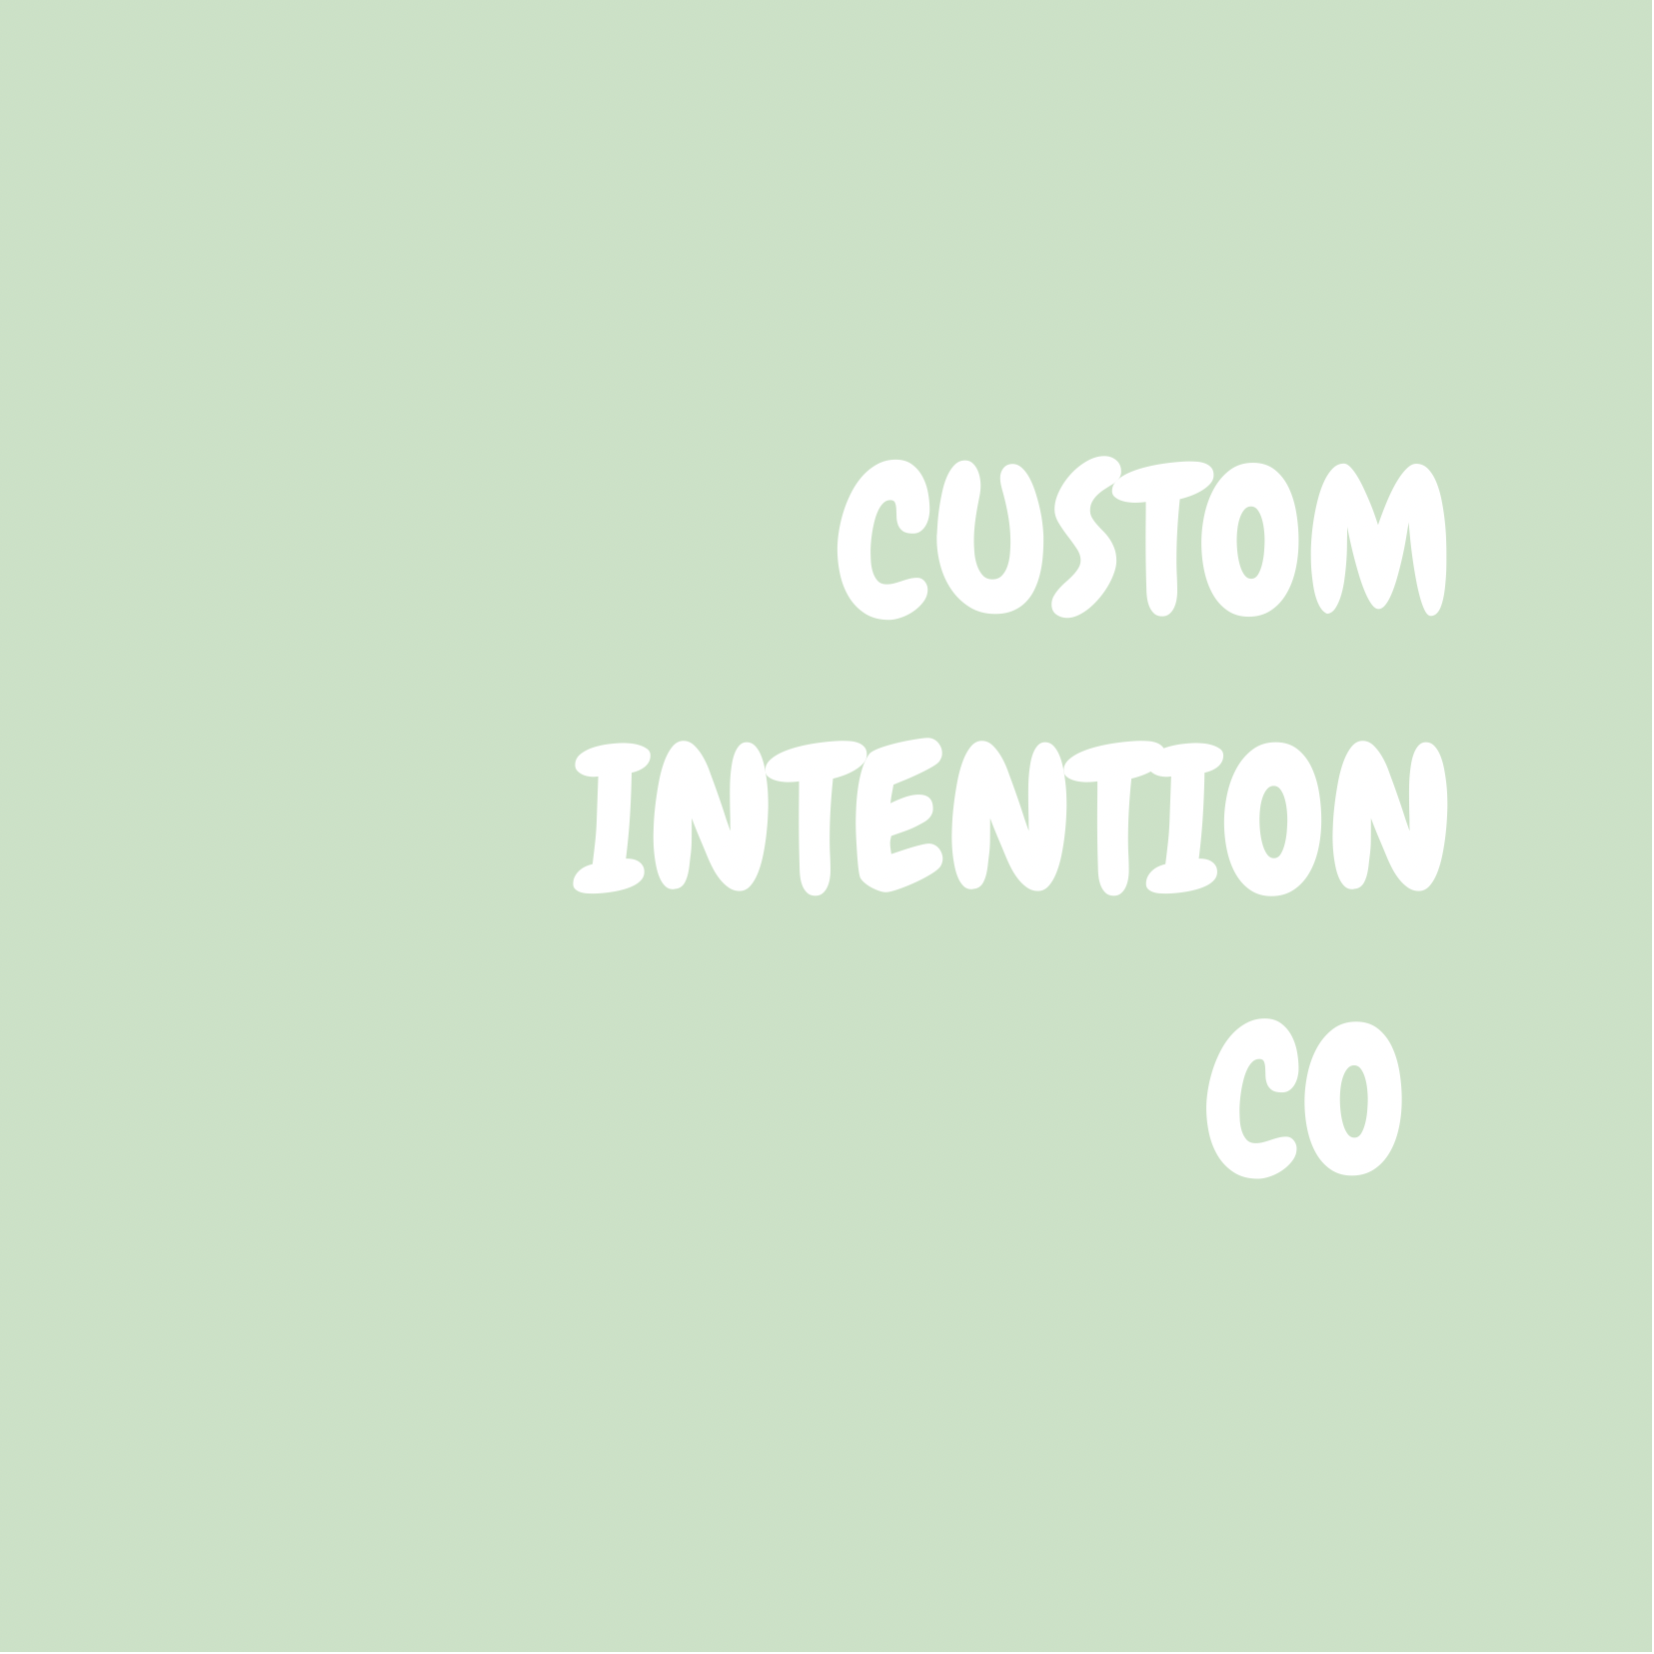 Custom Intention Co